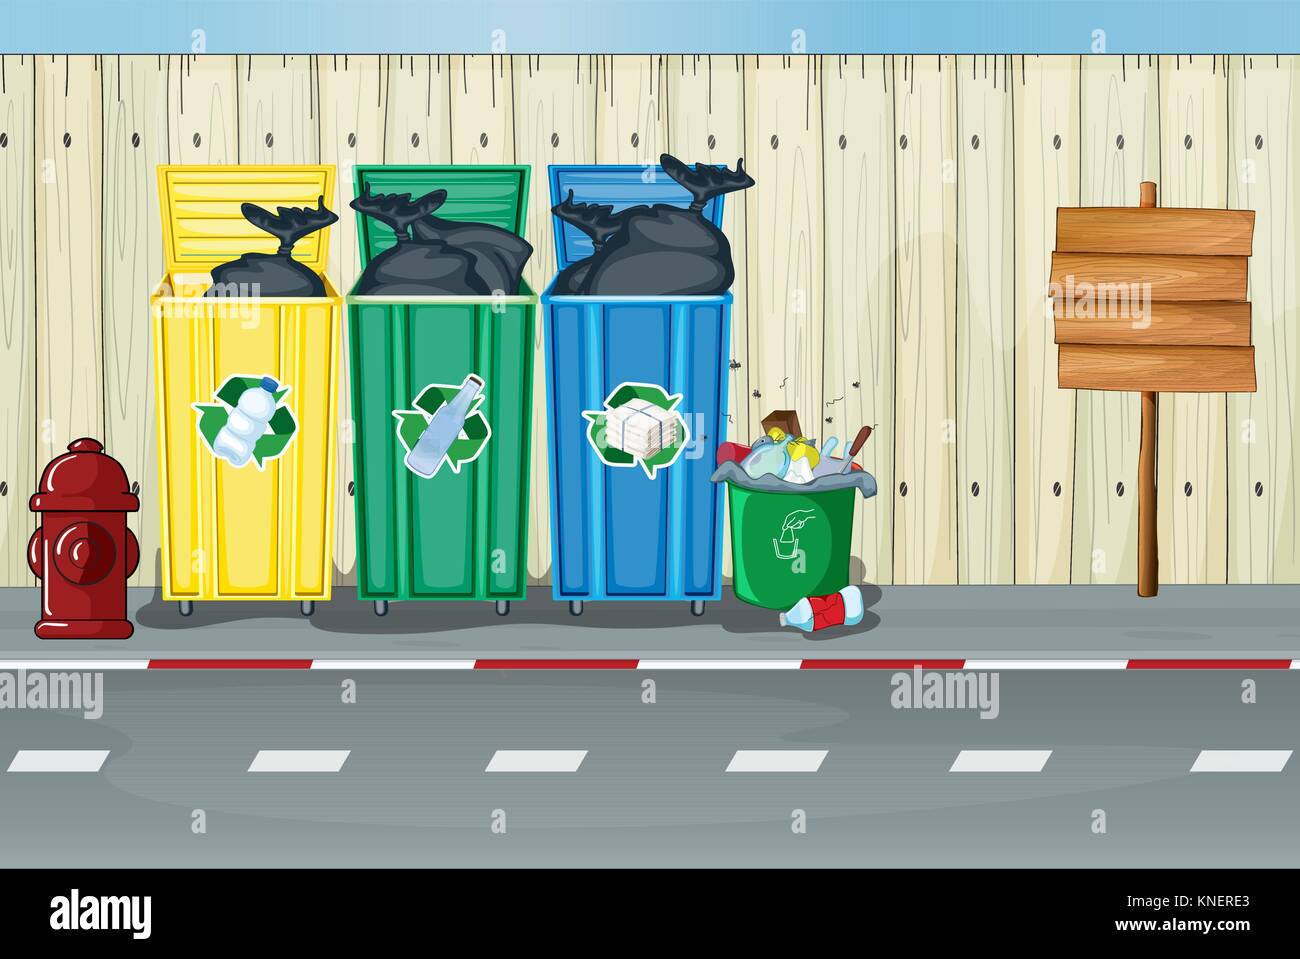 Мультфильм про мусор